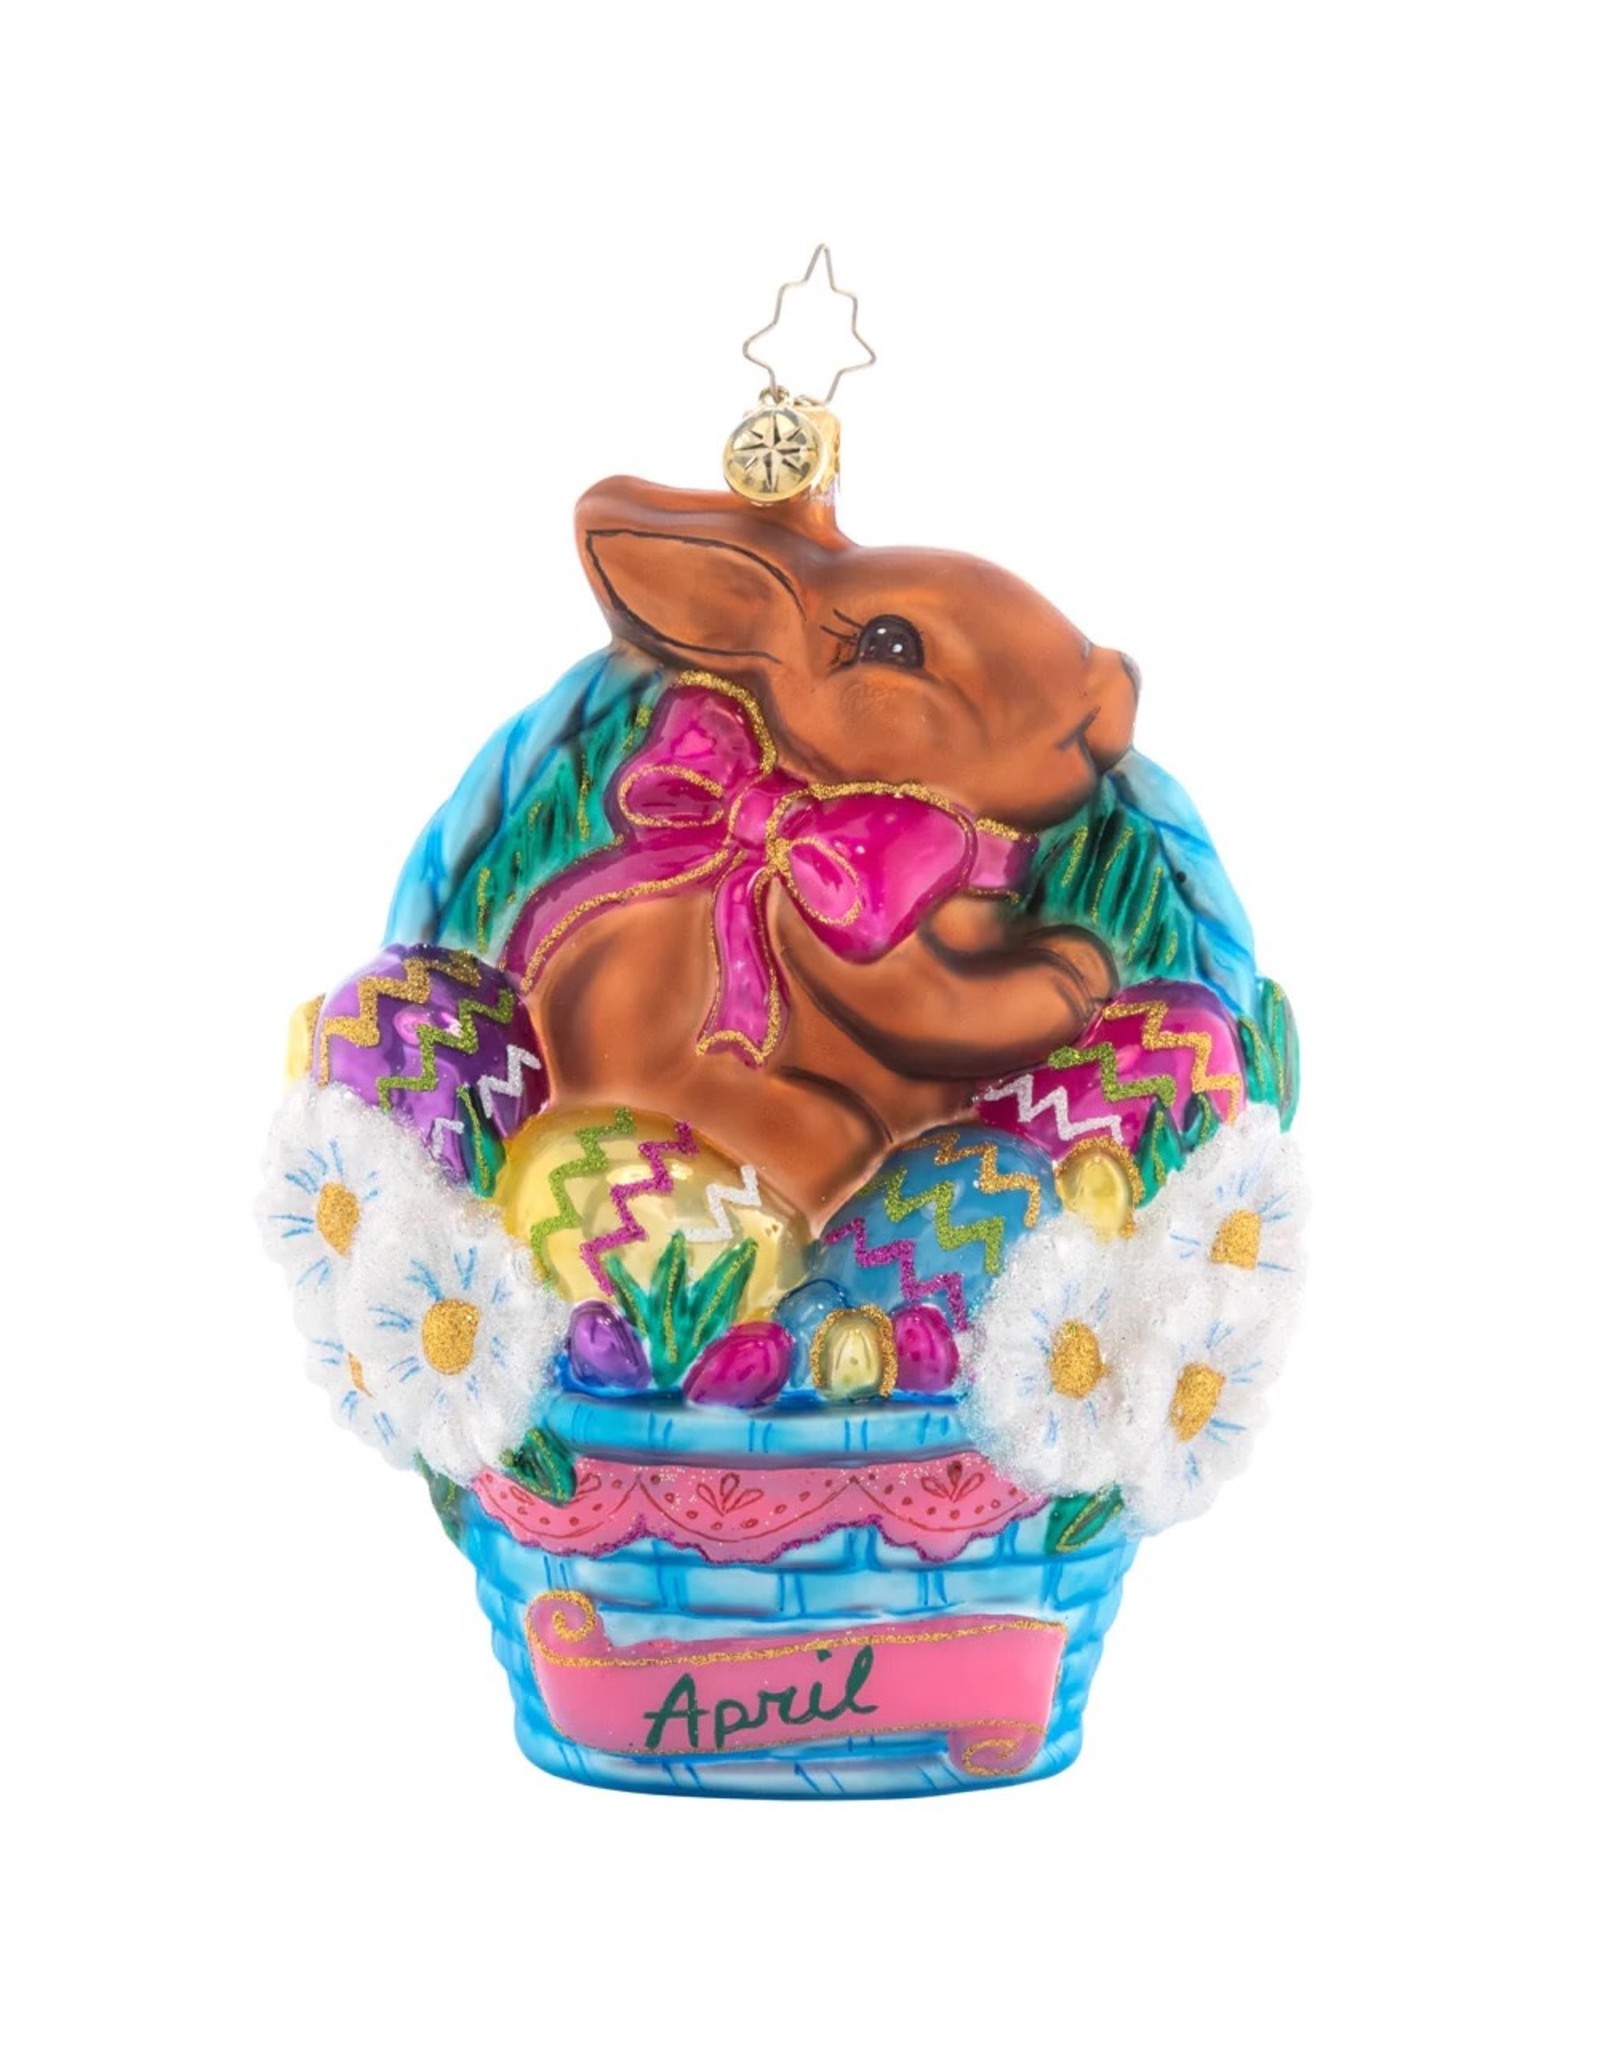 Christopher Radko Hoppy Easter Bunny Basket | April Ornament of the Month